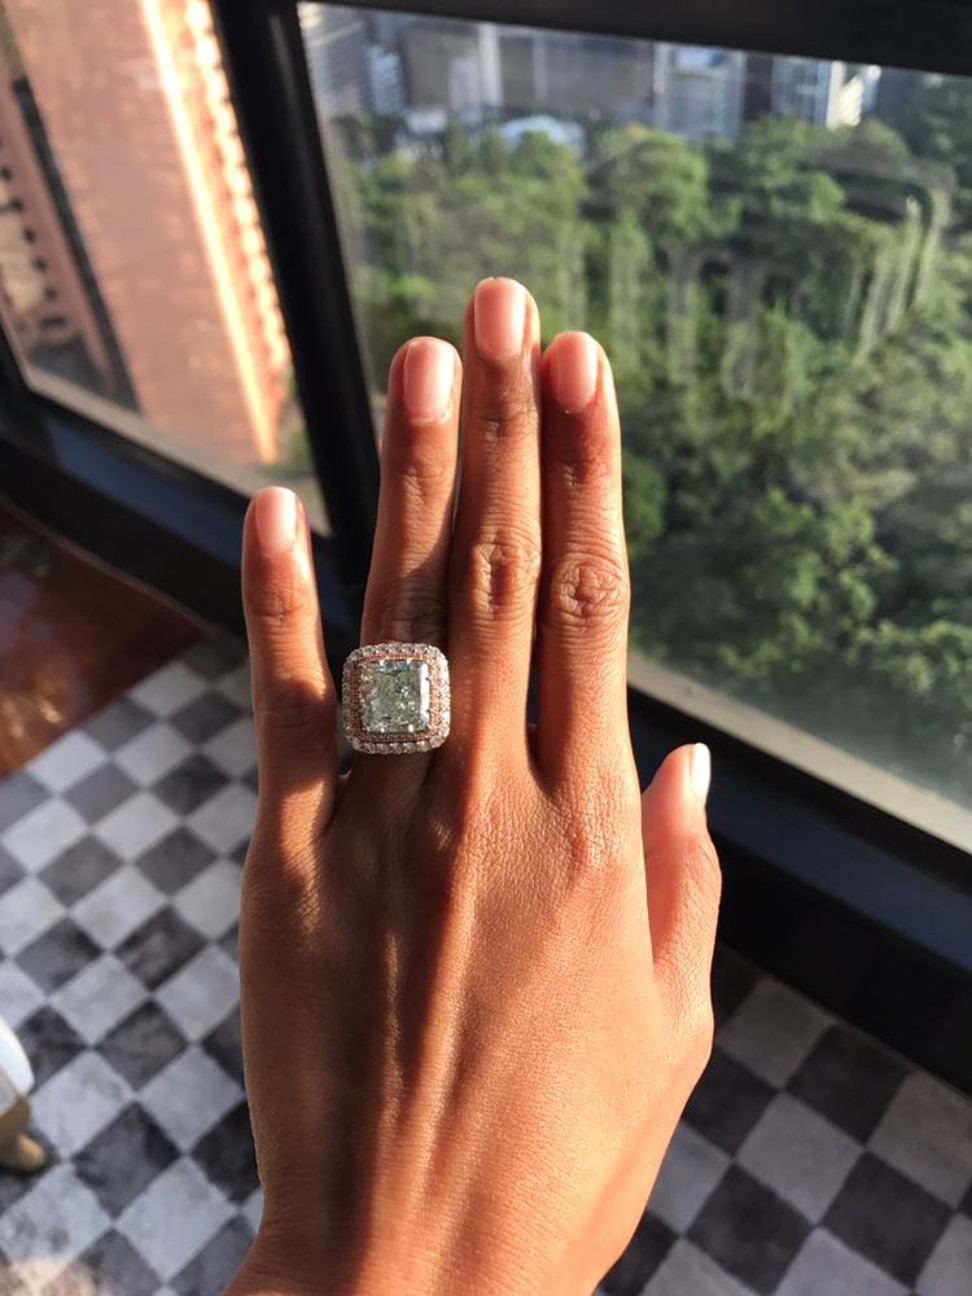 Azura shows off a diamond ring on social media.